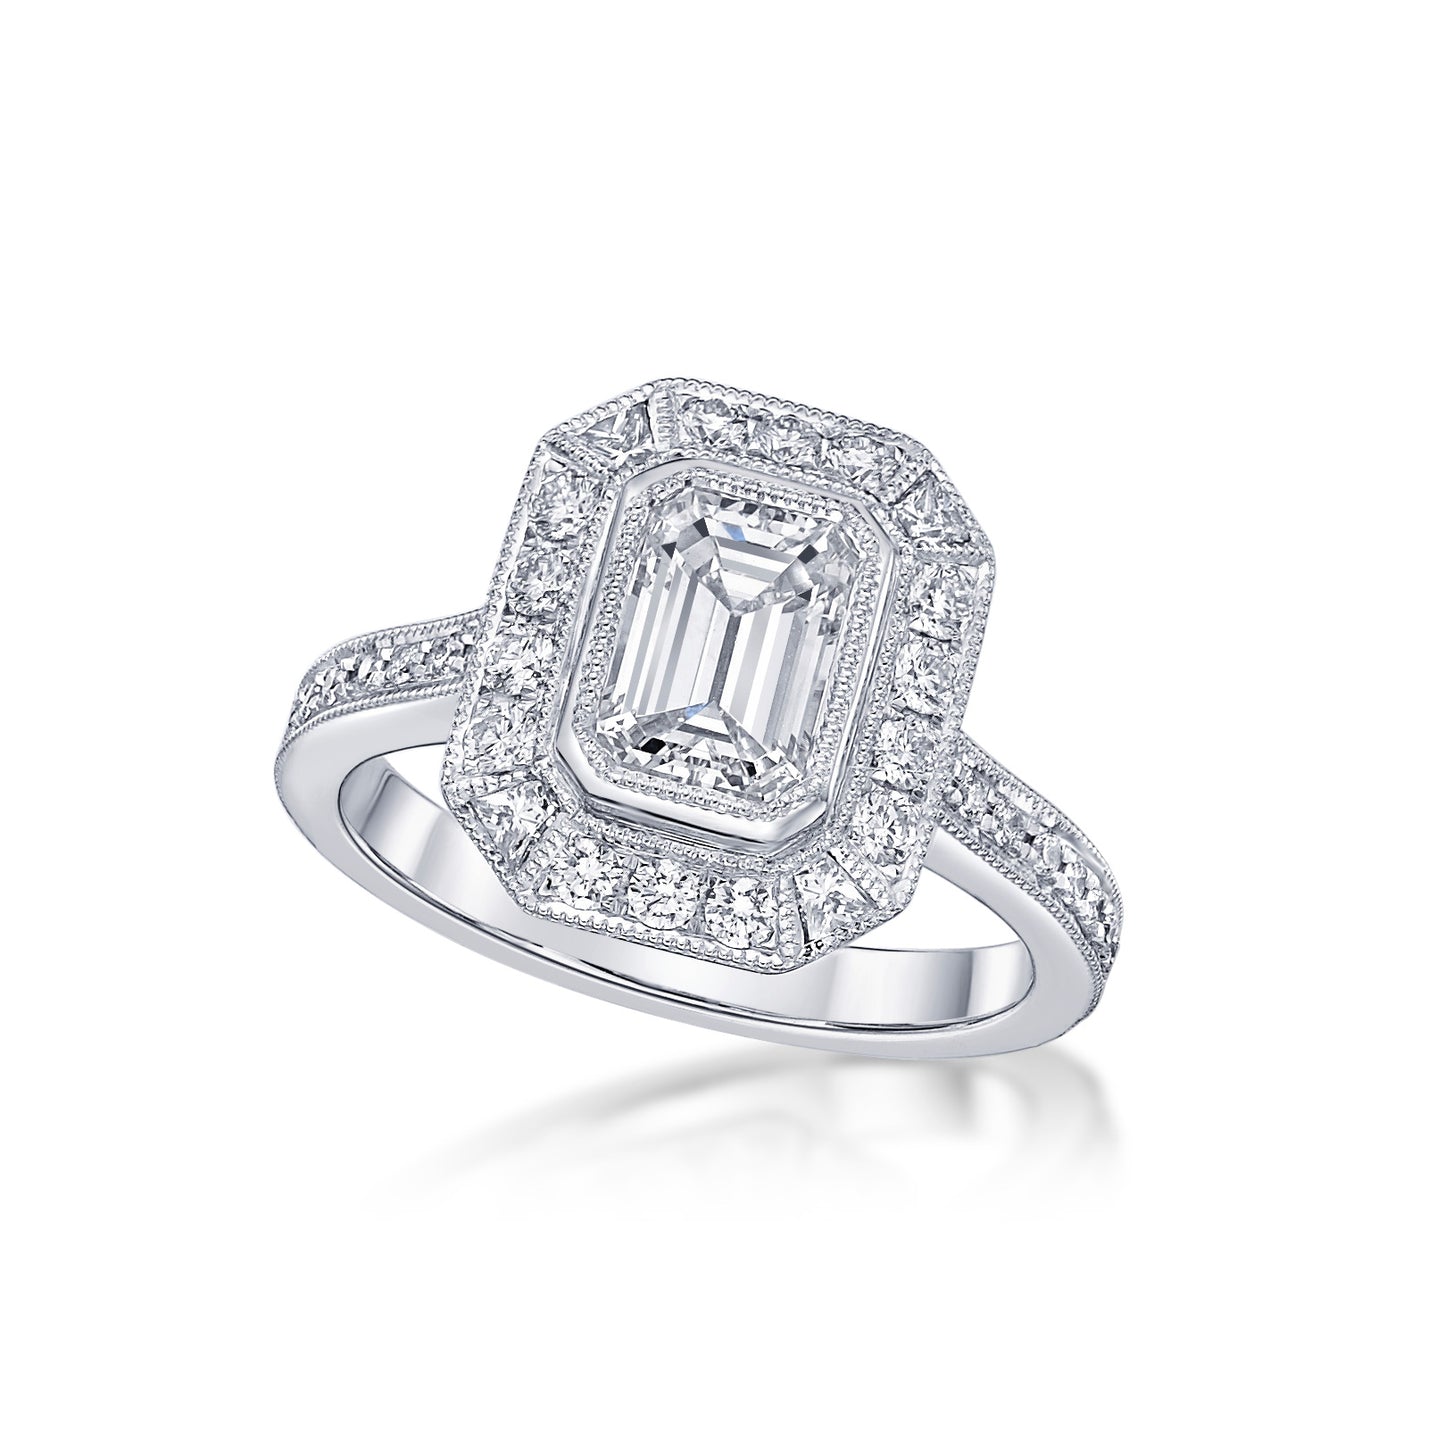 1.01ct Emerald Cut Diamond bezel set in an 18K White Gold Vintage-style handmade setting